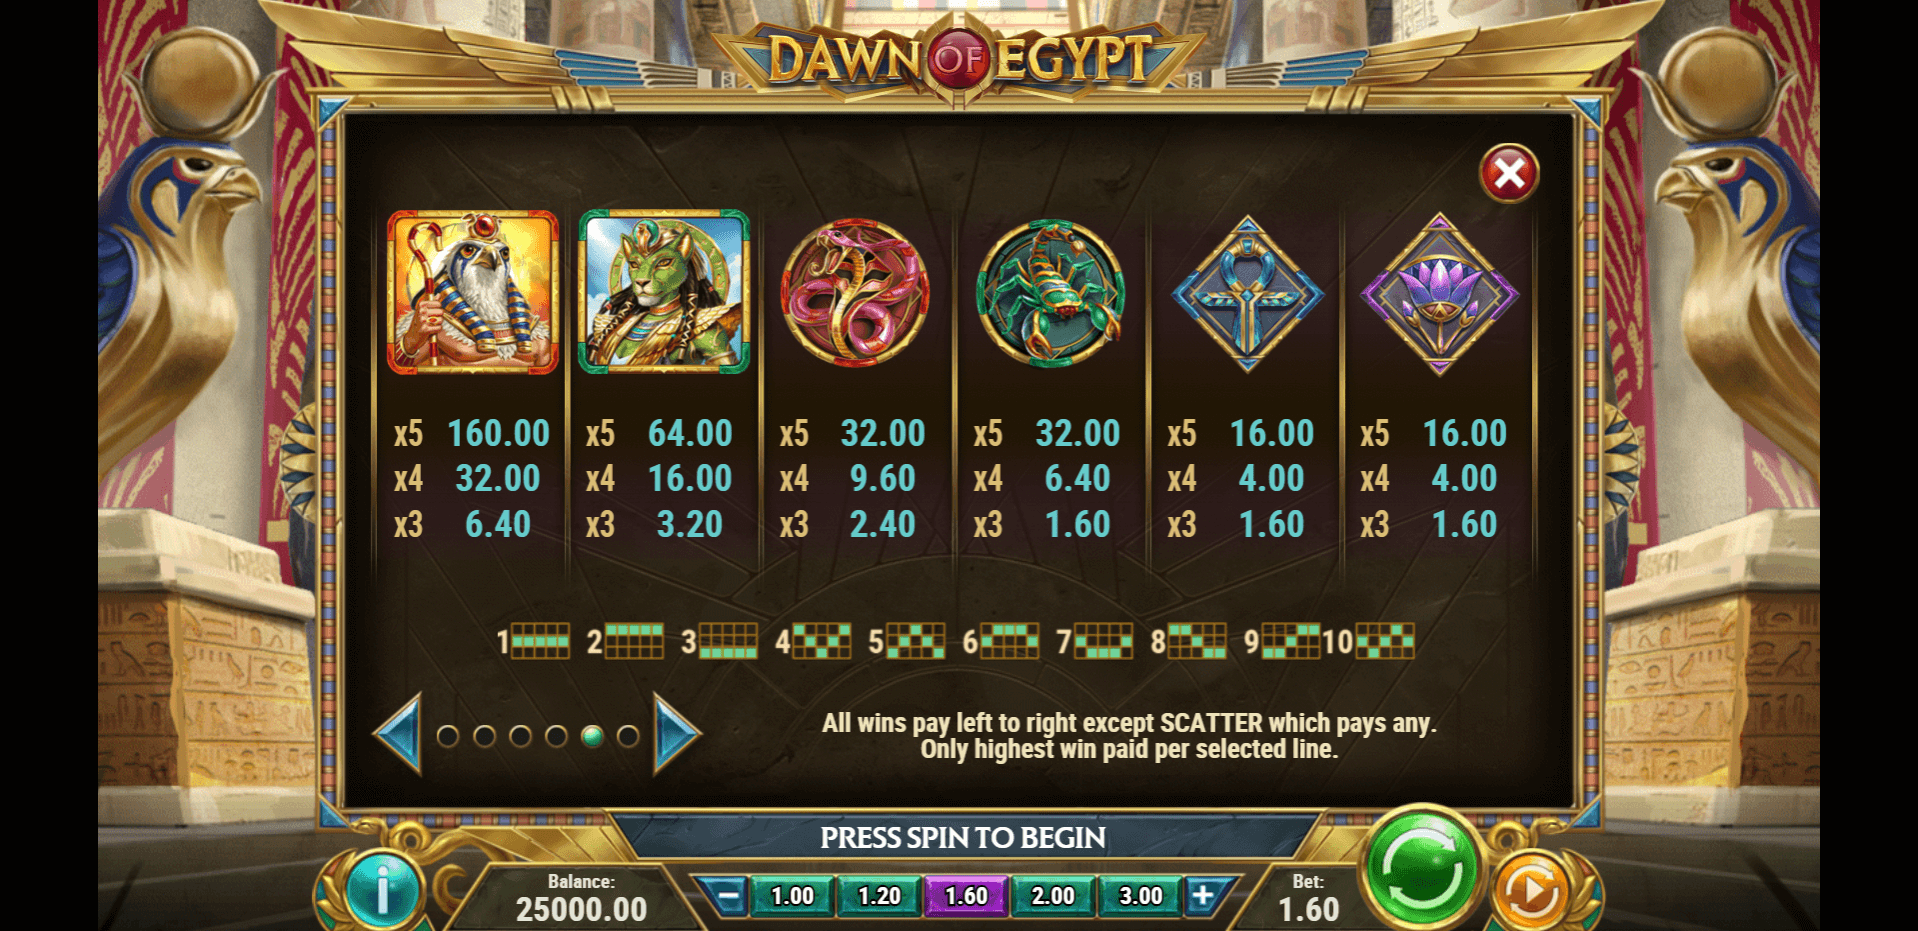 dawn of egypt slot machine detail image 4